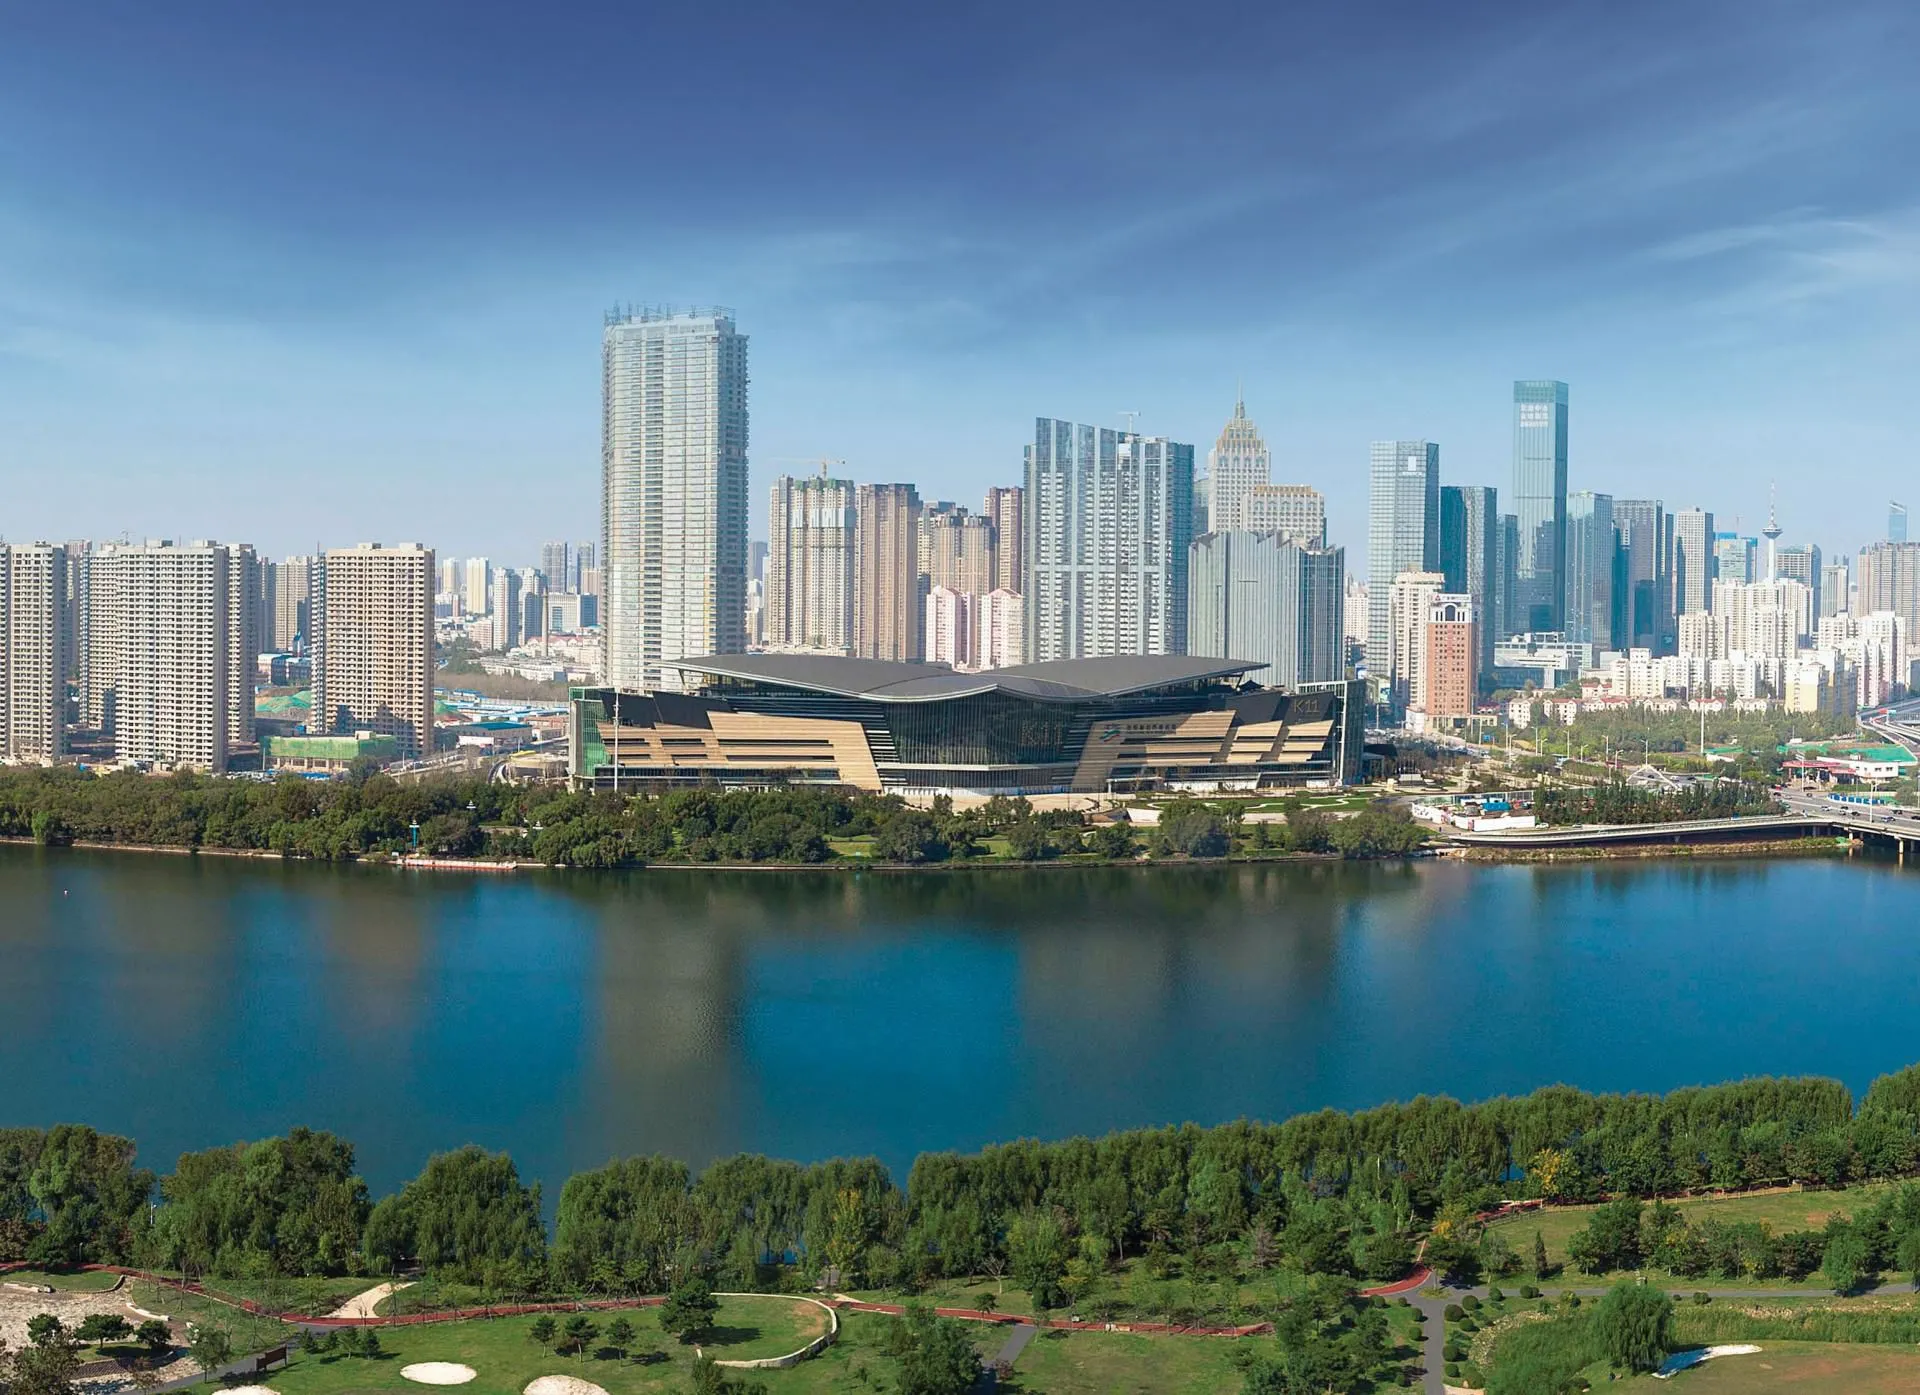 Shenyang New World Centre